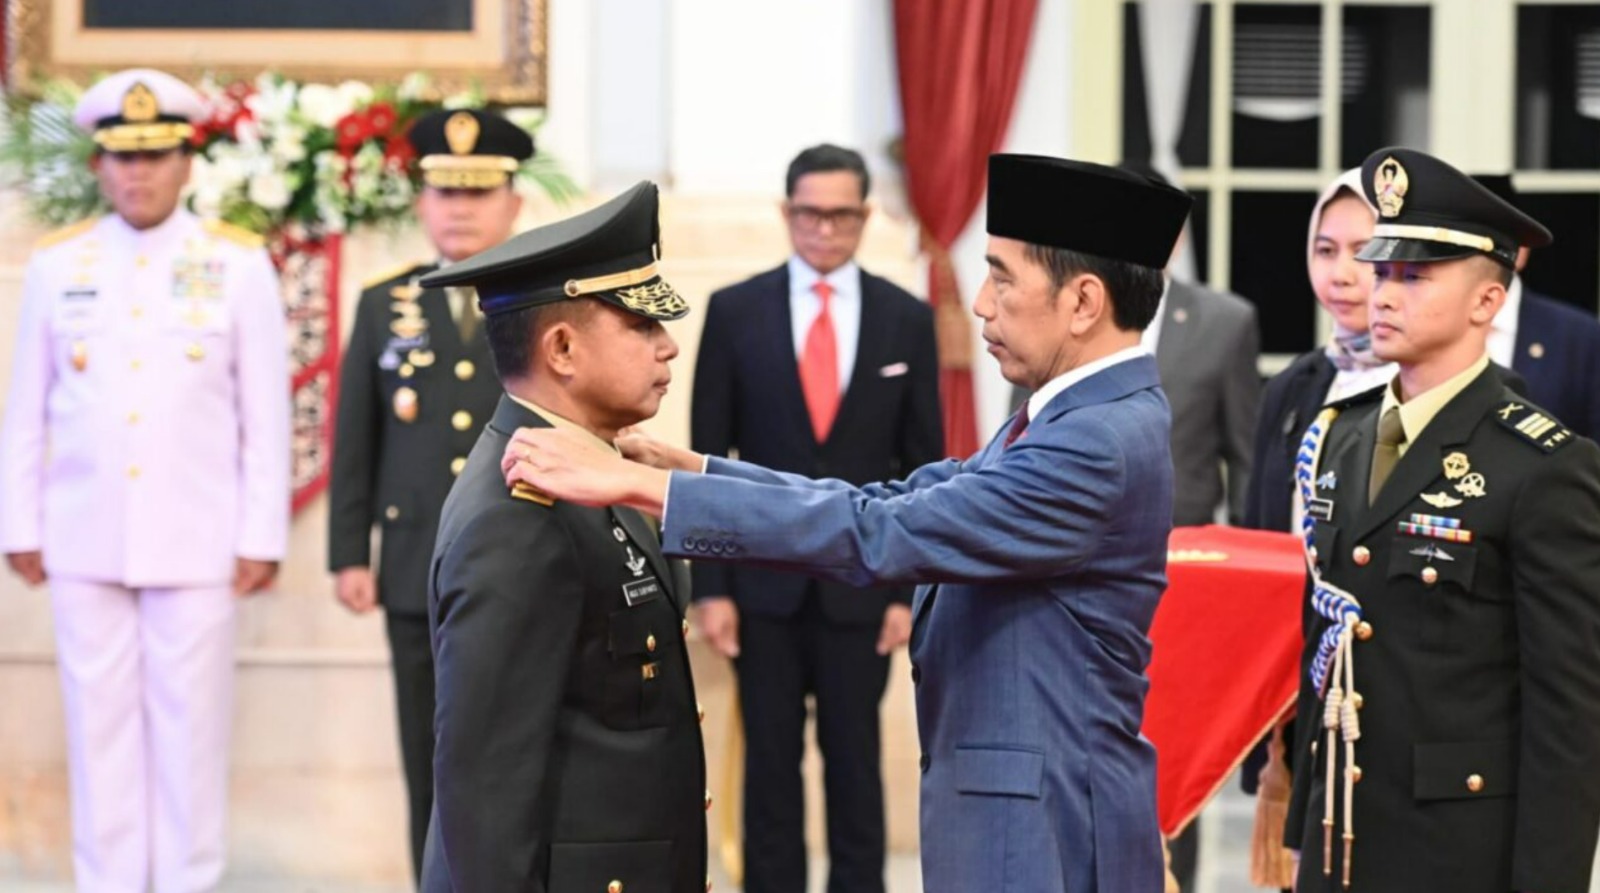 Presiden ajukan Jendral Agus Subiyanto jabat Panglima TNI